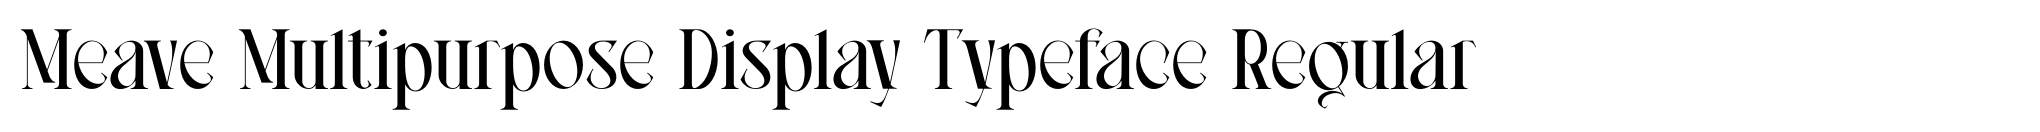 Meave Multipurpose Display Typeface Regular image